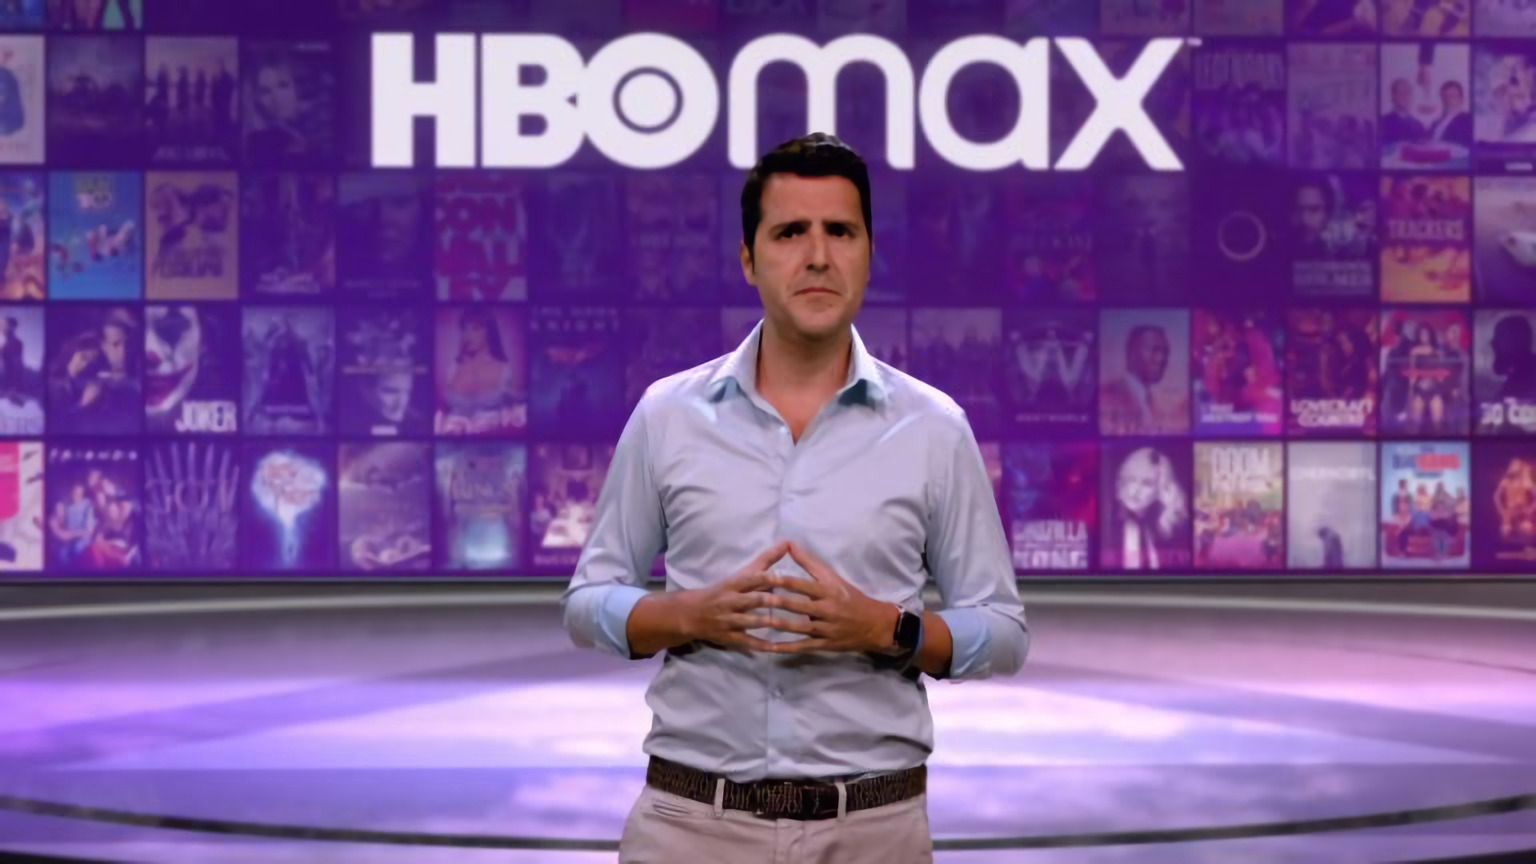 HBO Max chega ao Brasil no dia 29 de junho por a partir de R$ 20